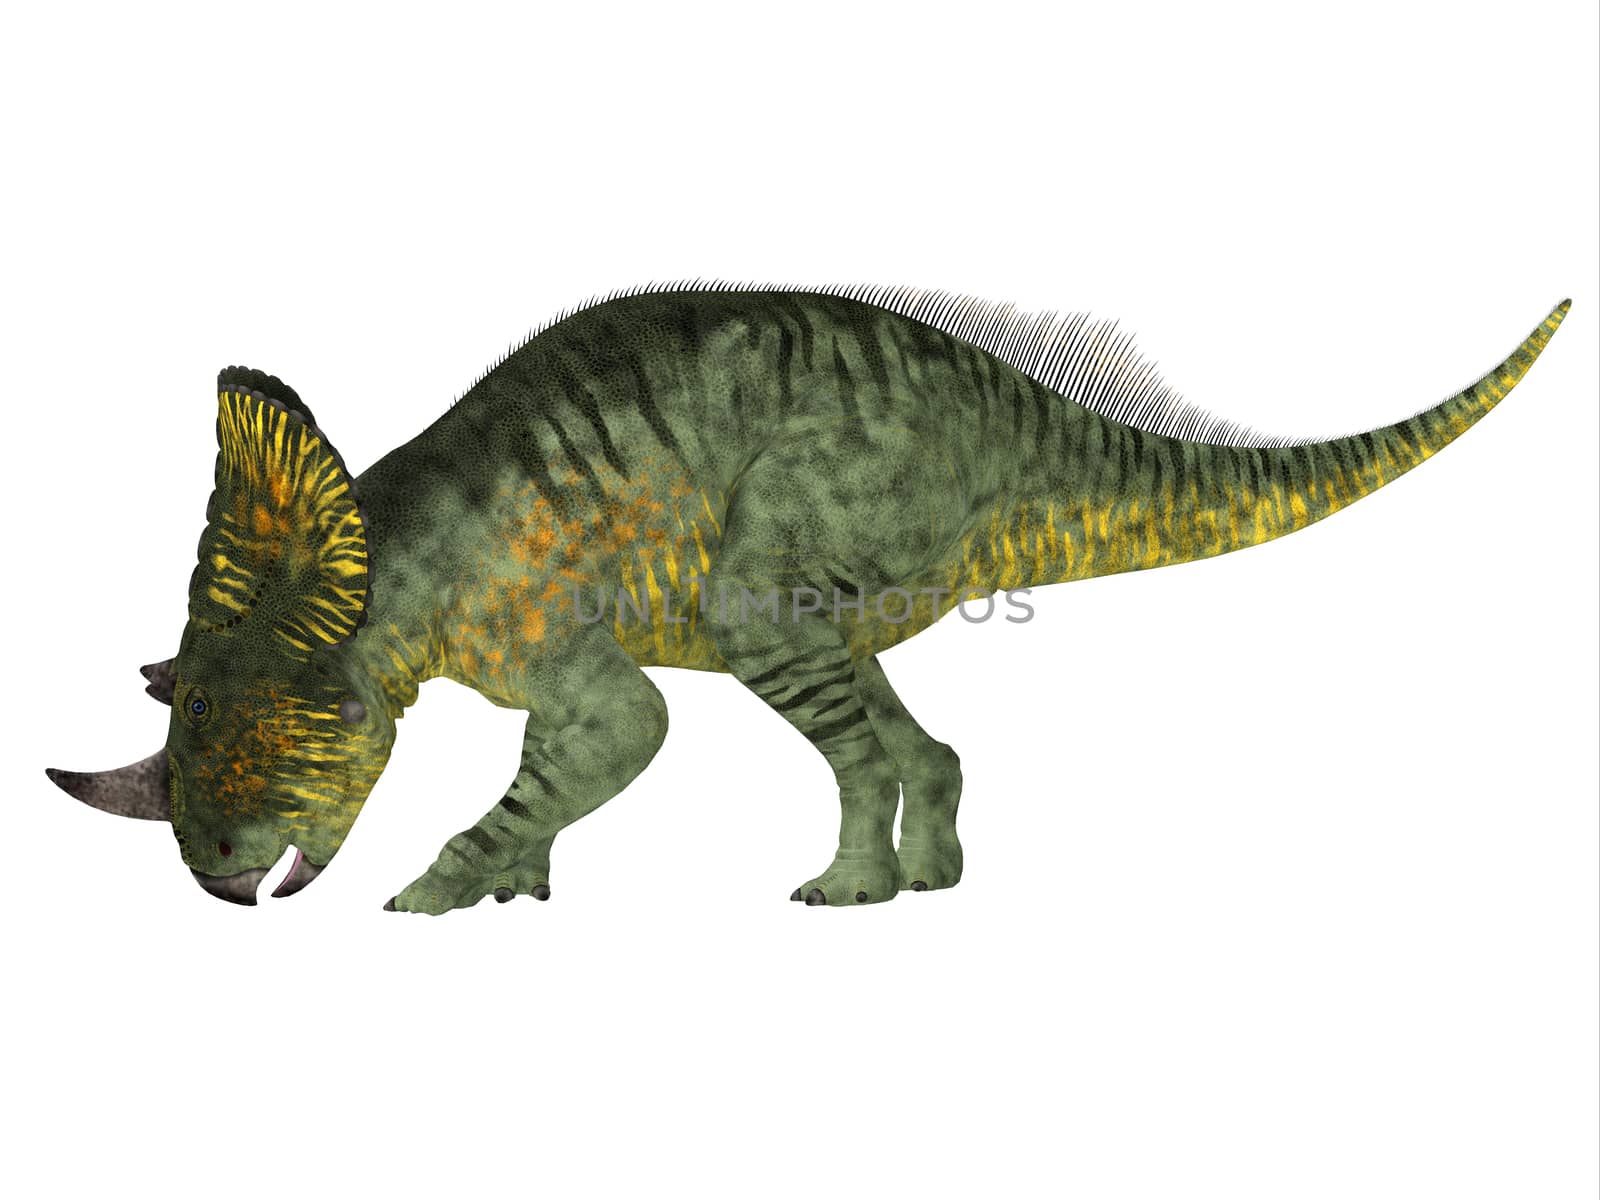 Brachyceratops Dinosaur Side Profile by Catmando